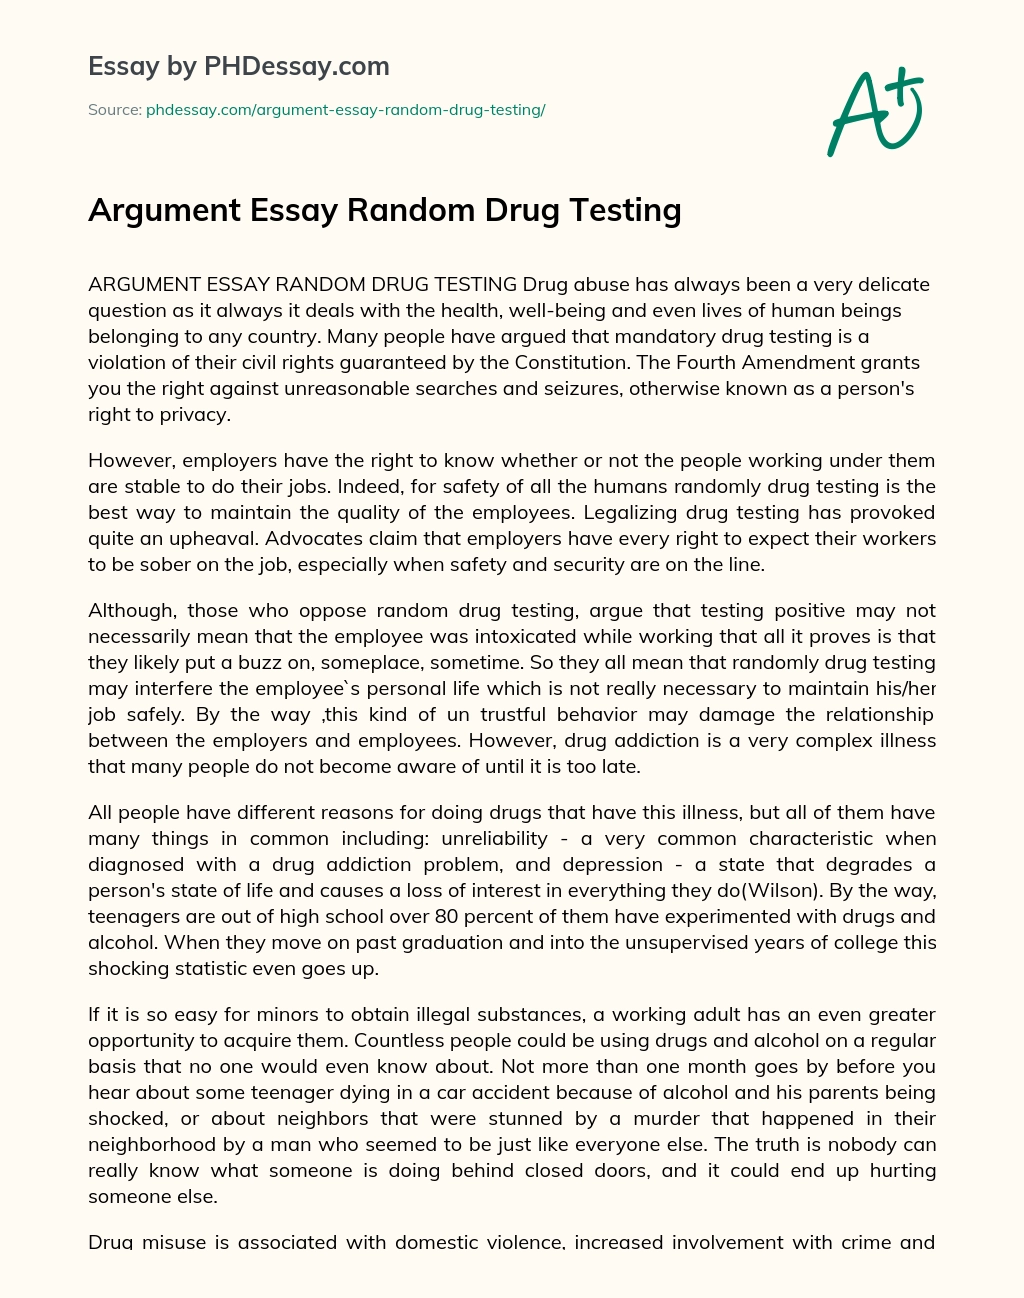 essay title about random drug testing